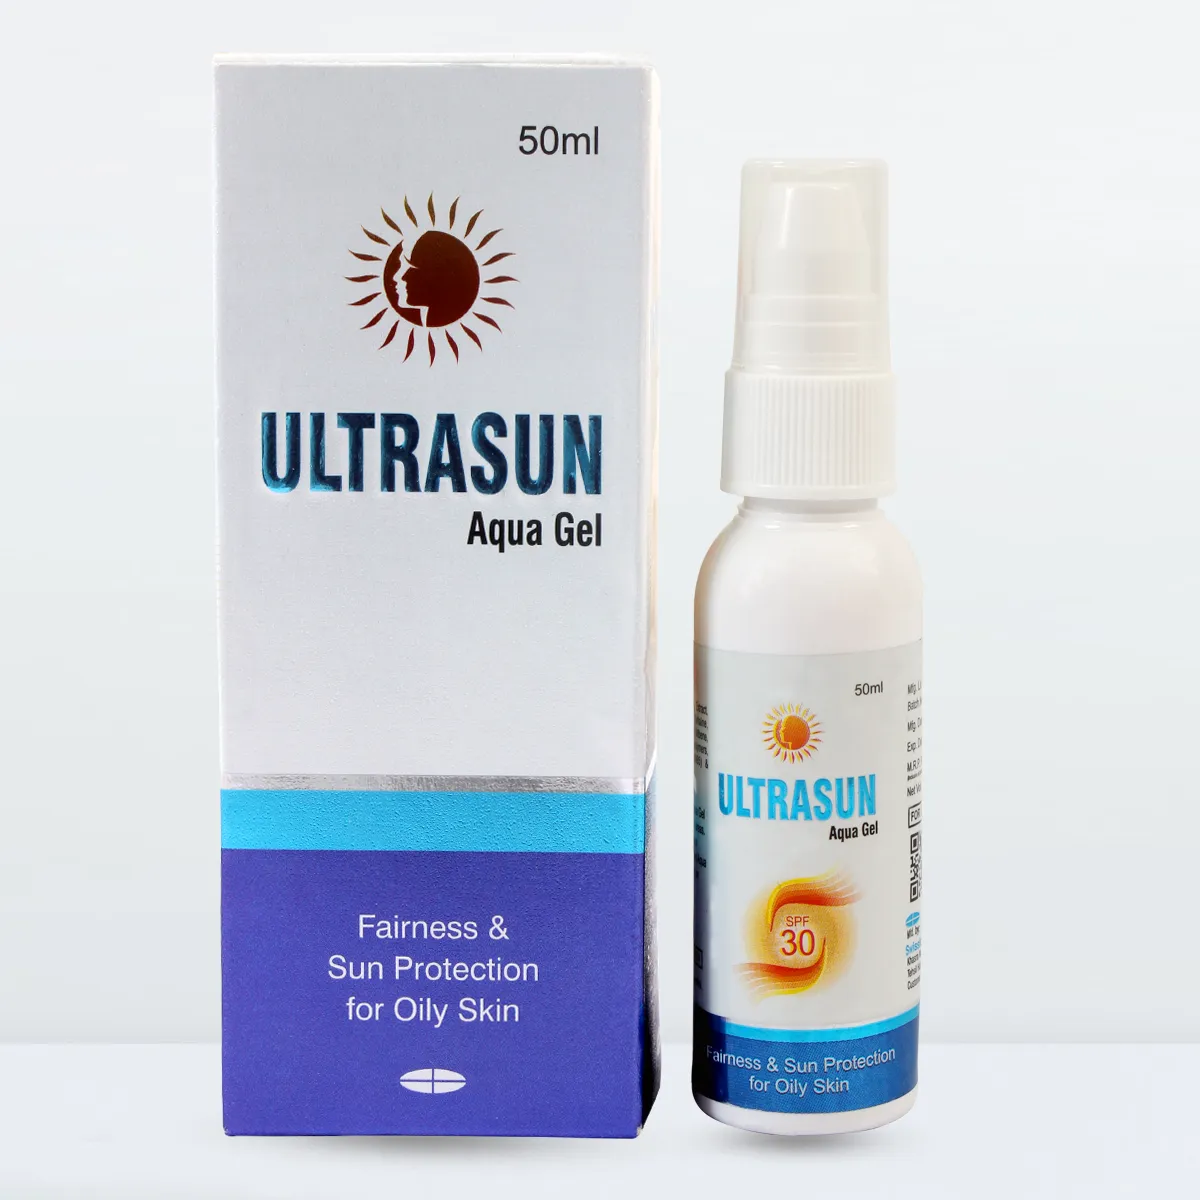 Ultrasun Aqua Gel 50ml